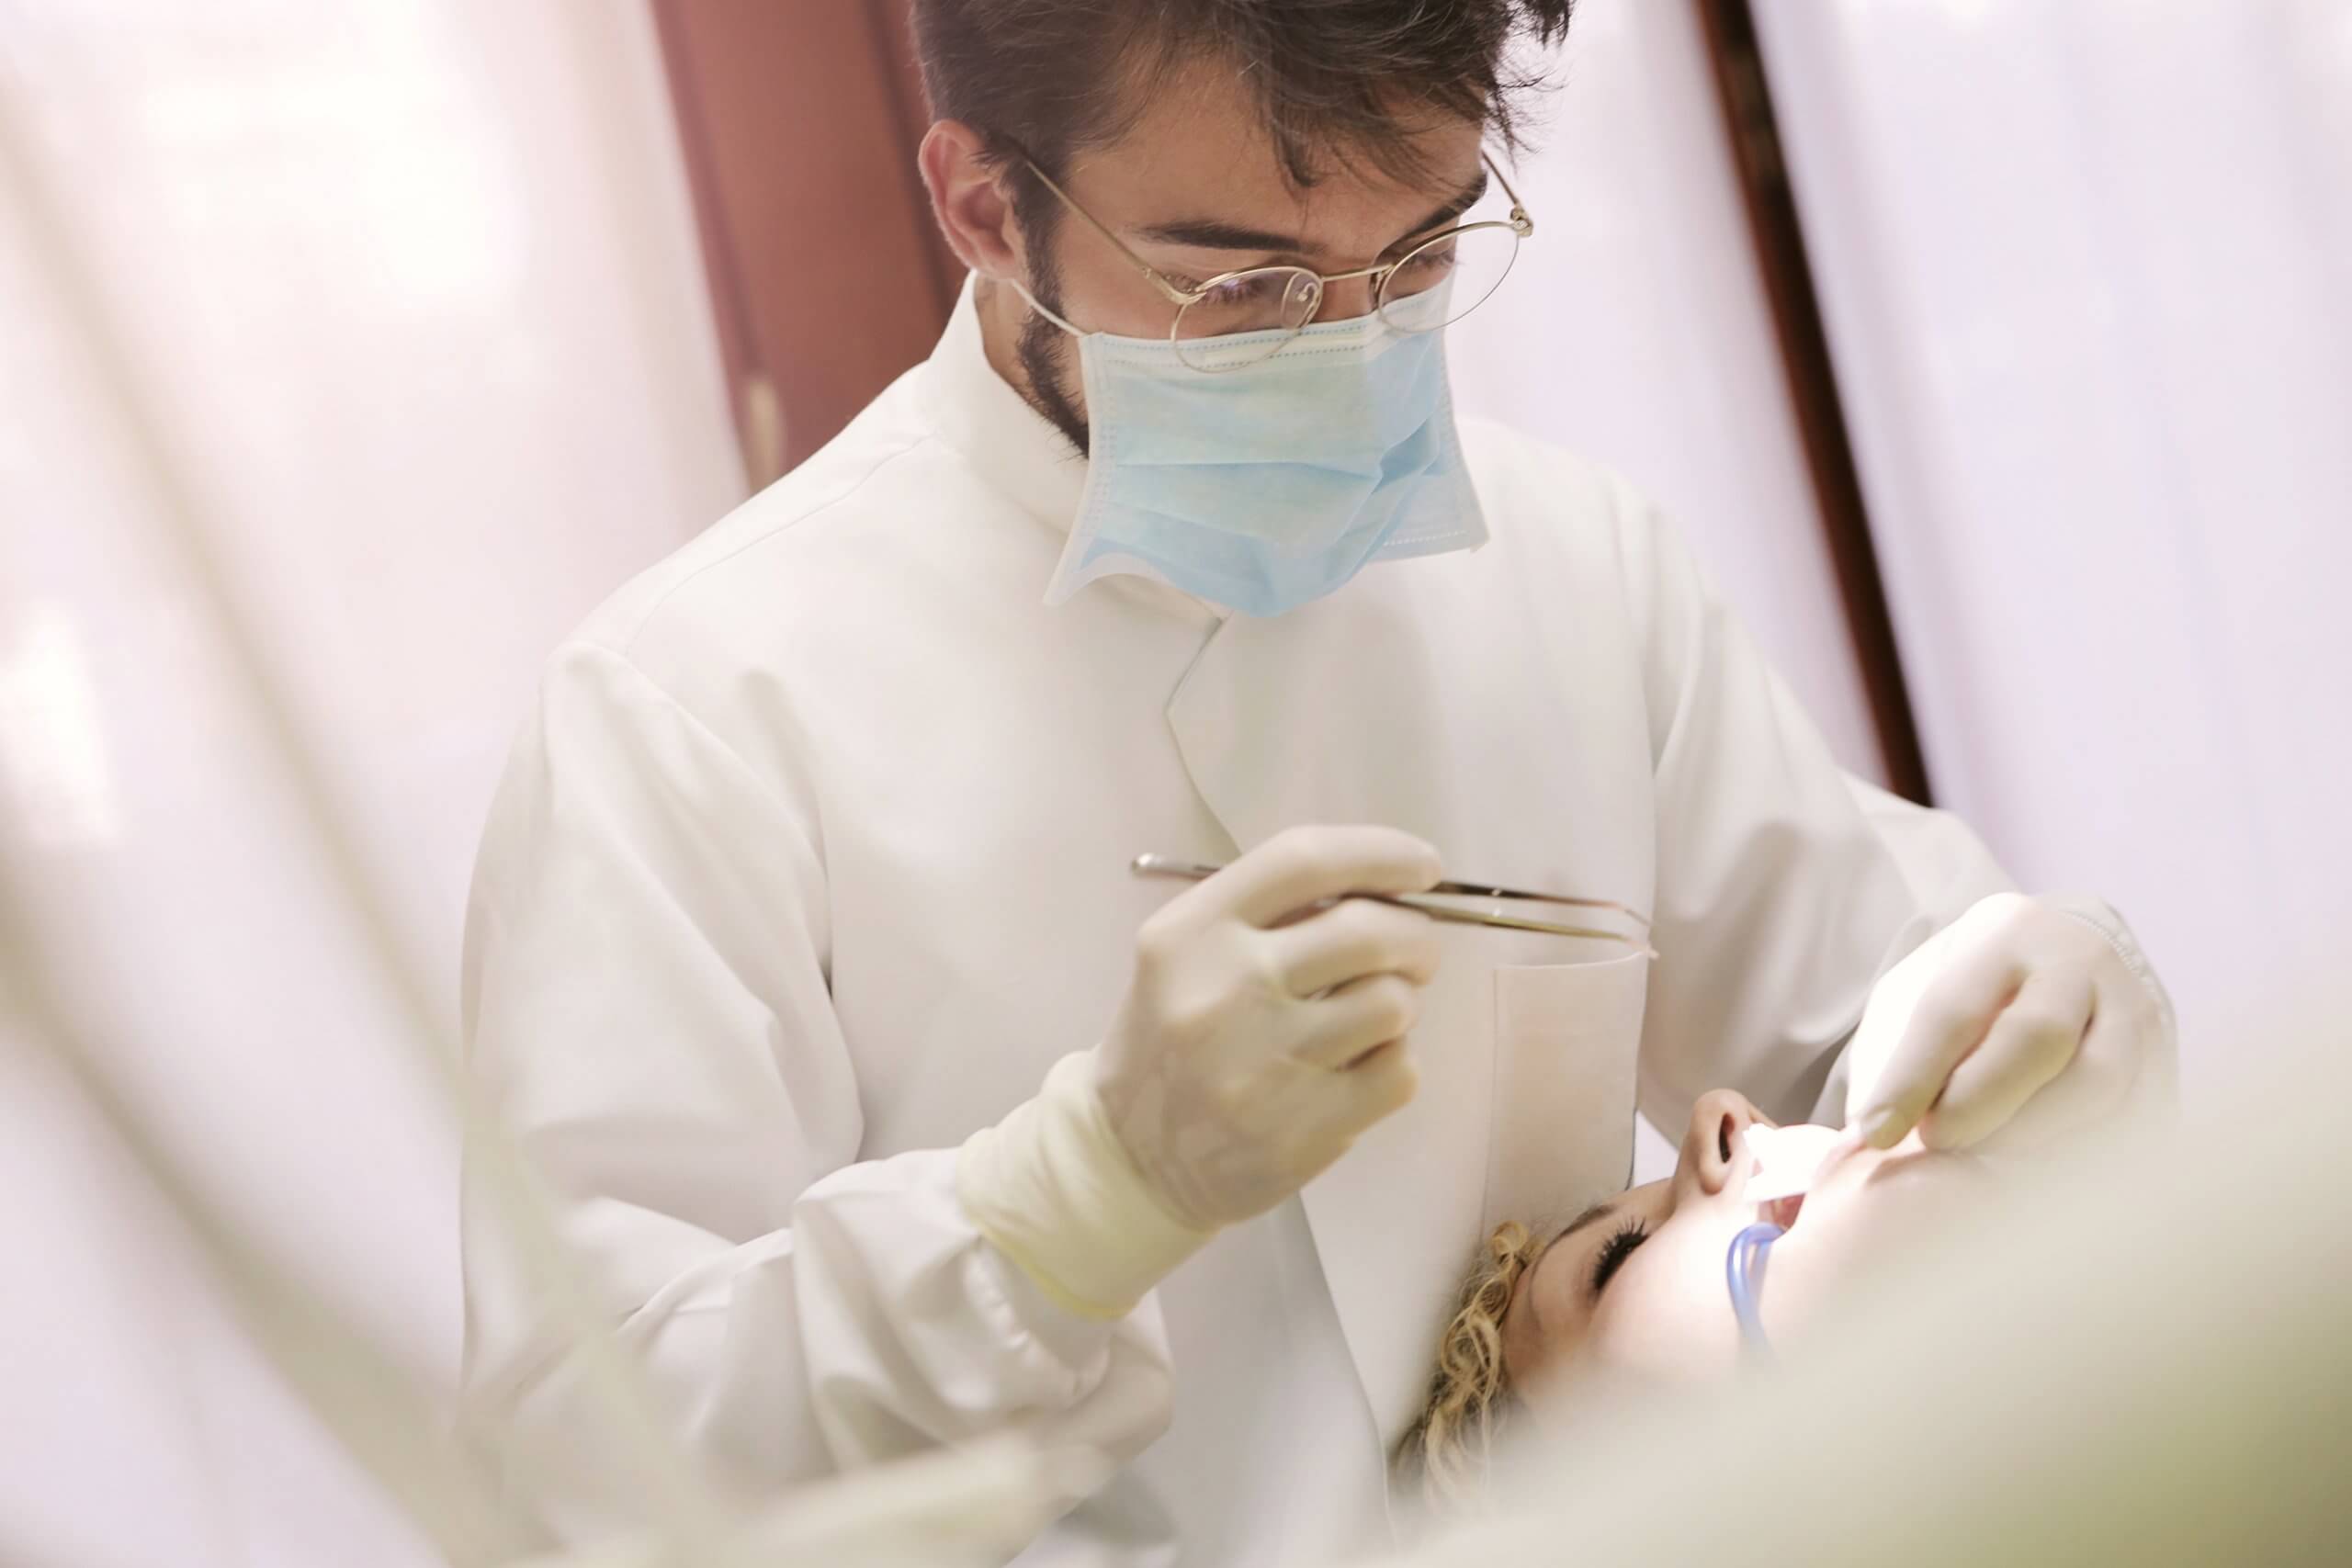 Dentist student